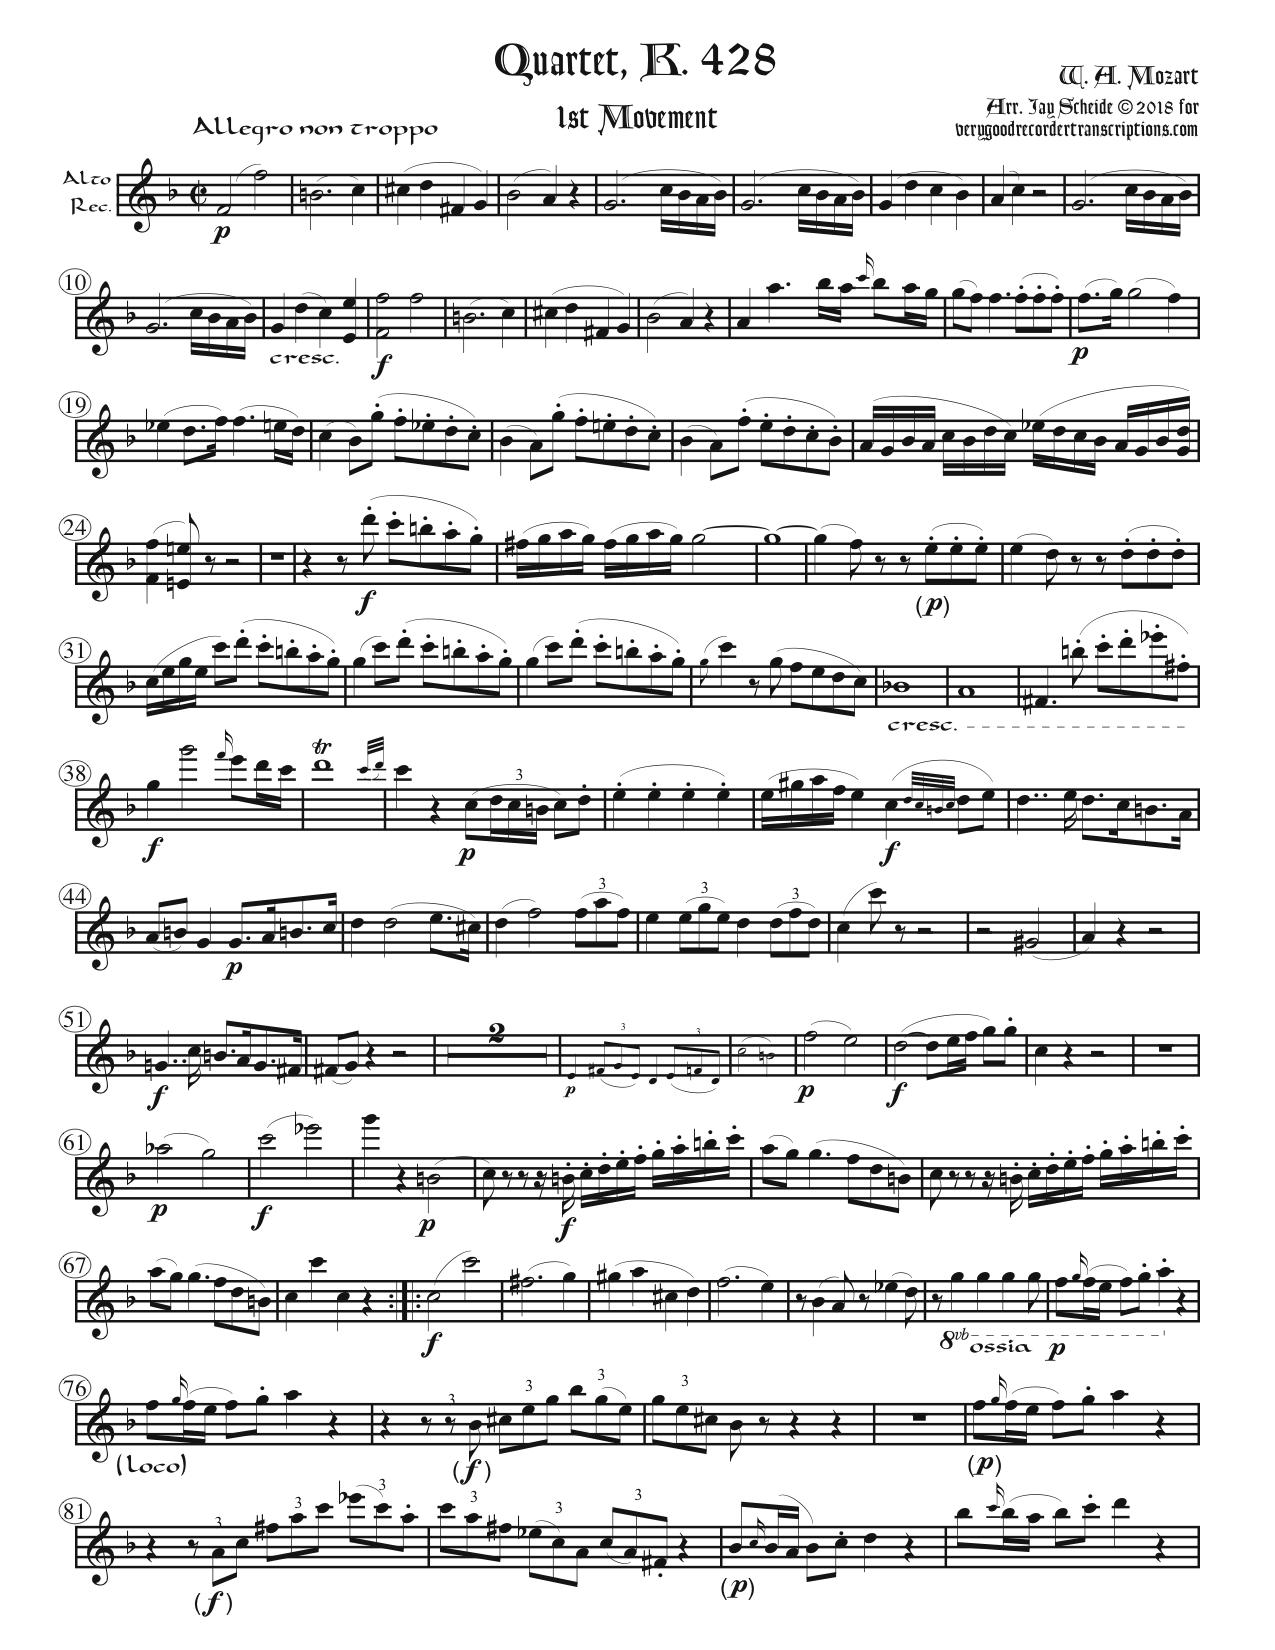 1st Movement from Quartet, K. 428